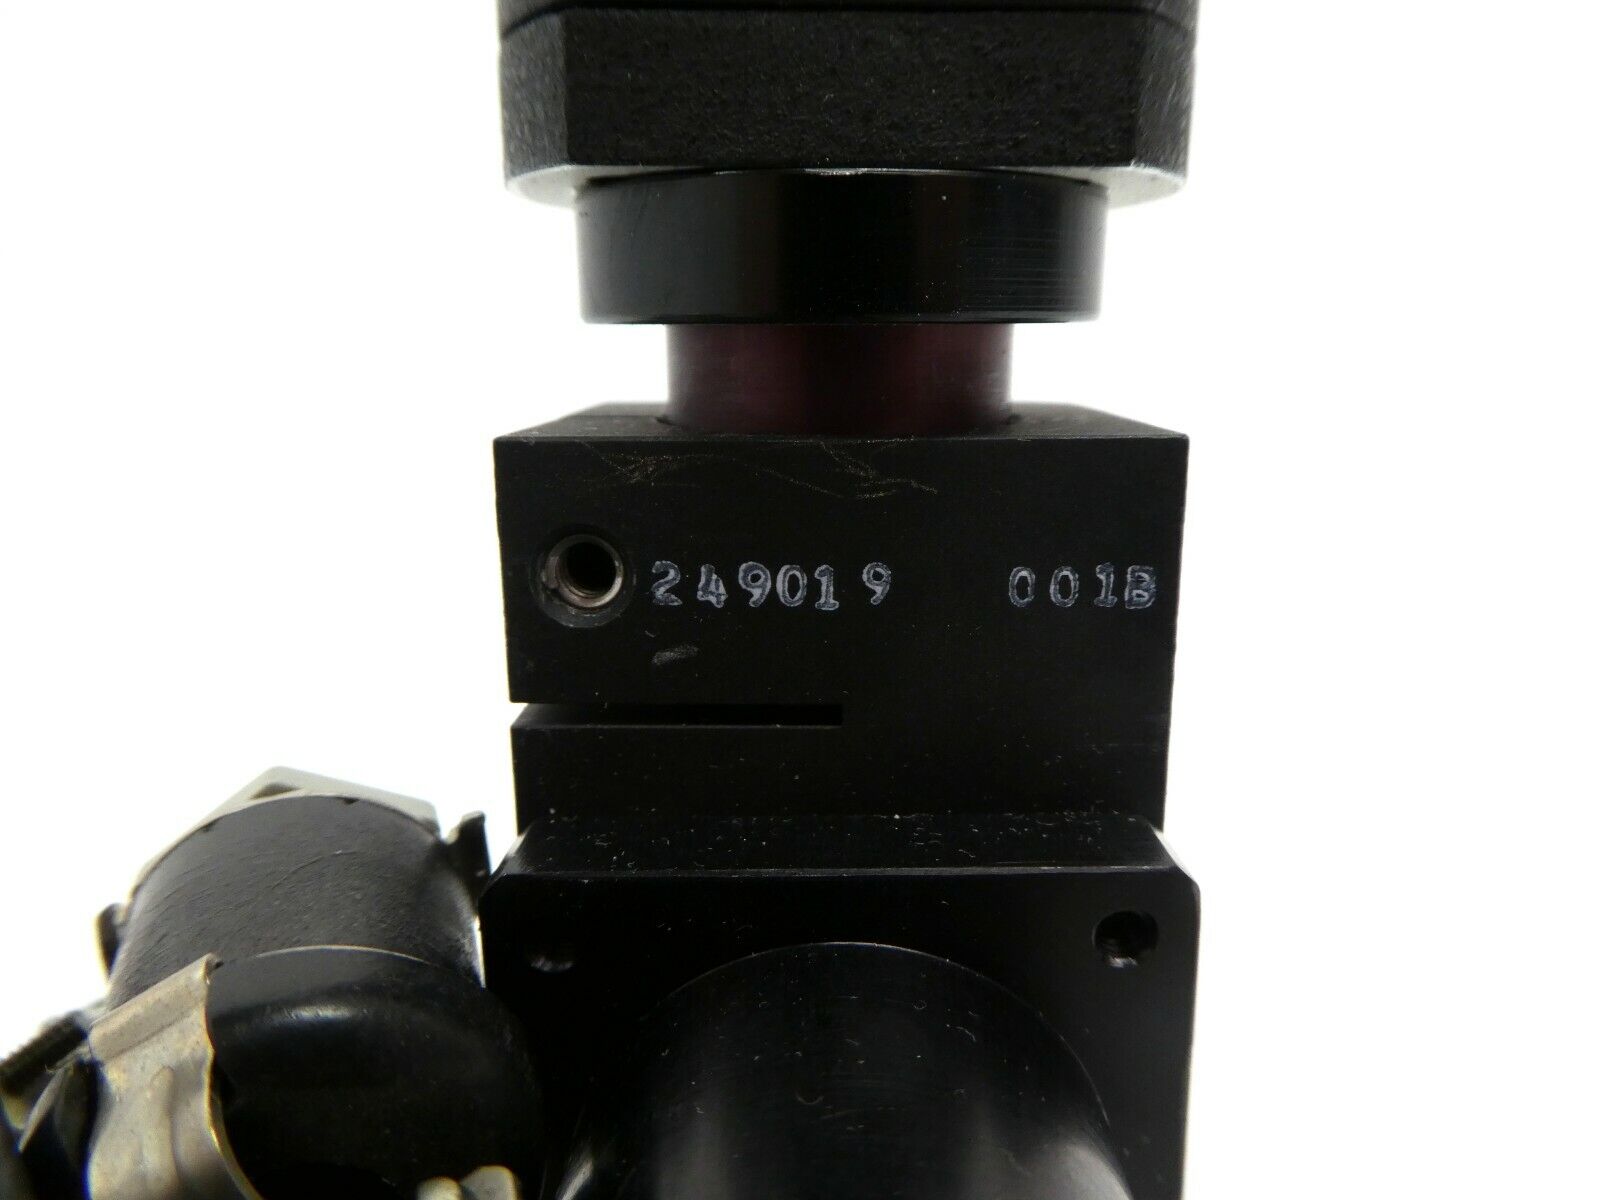 Electroglas 250957-001 Inspection Camera Module 250959-001 200mm 4085X Working